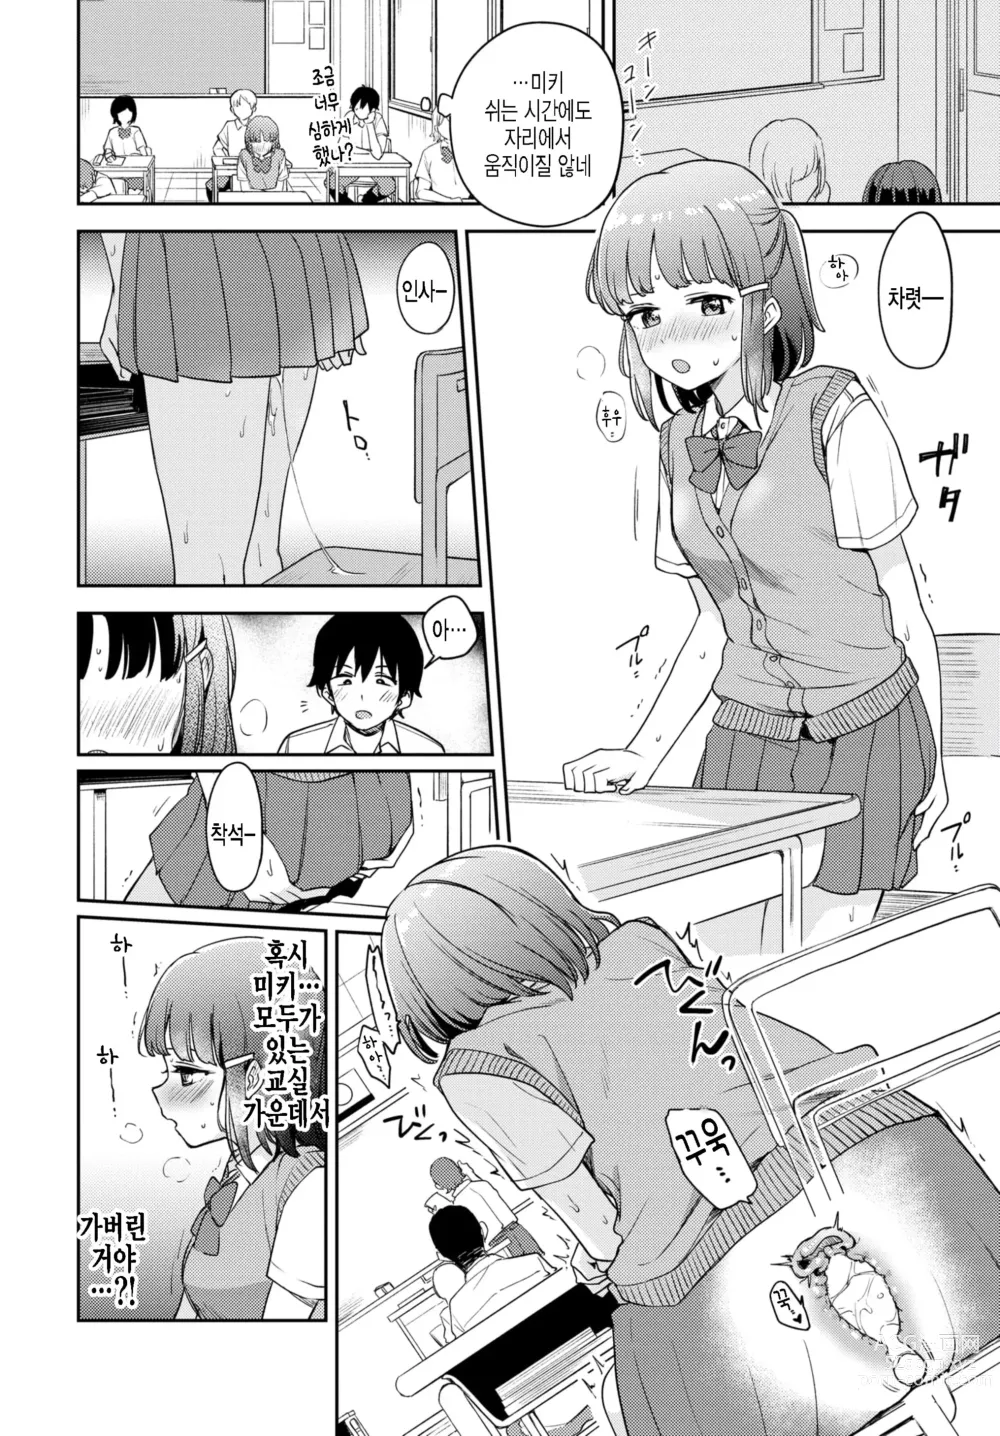 Page 10 of manga step by step